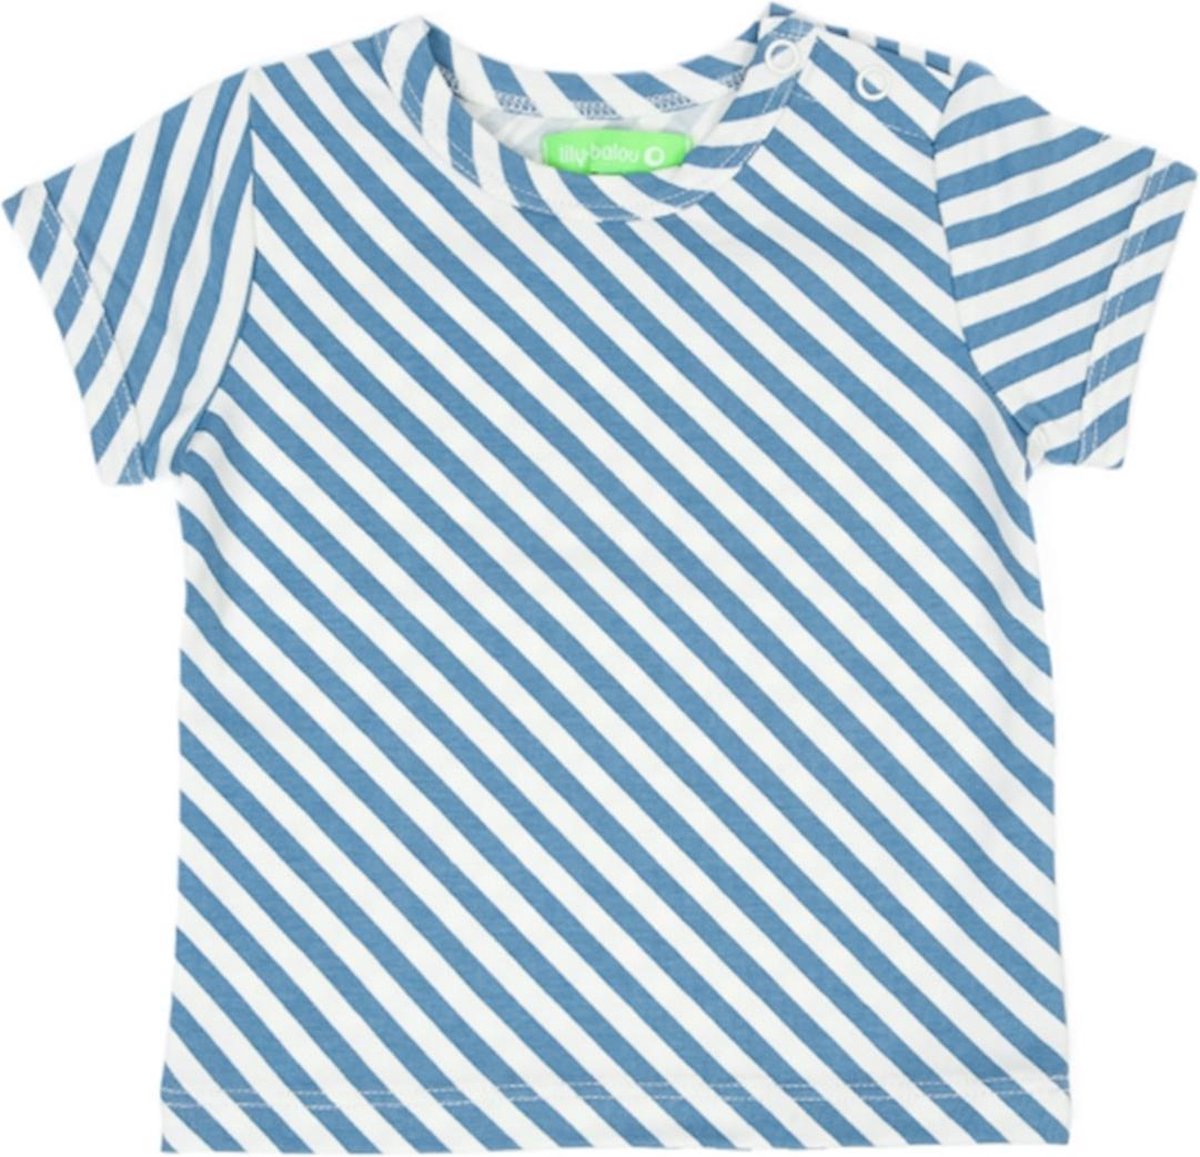 Lily Balou Baby Tshirt Kas Diagonal Stripes - 68